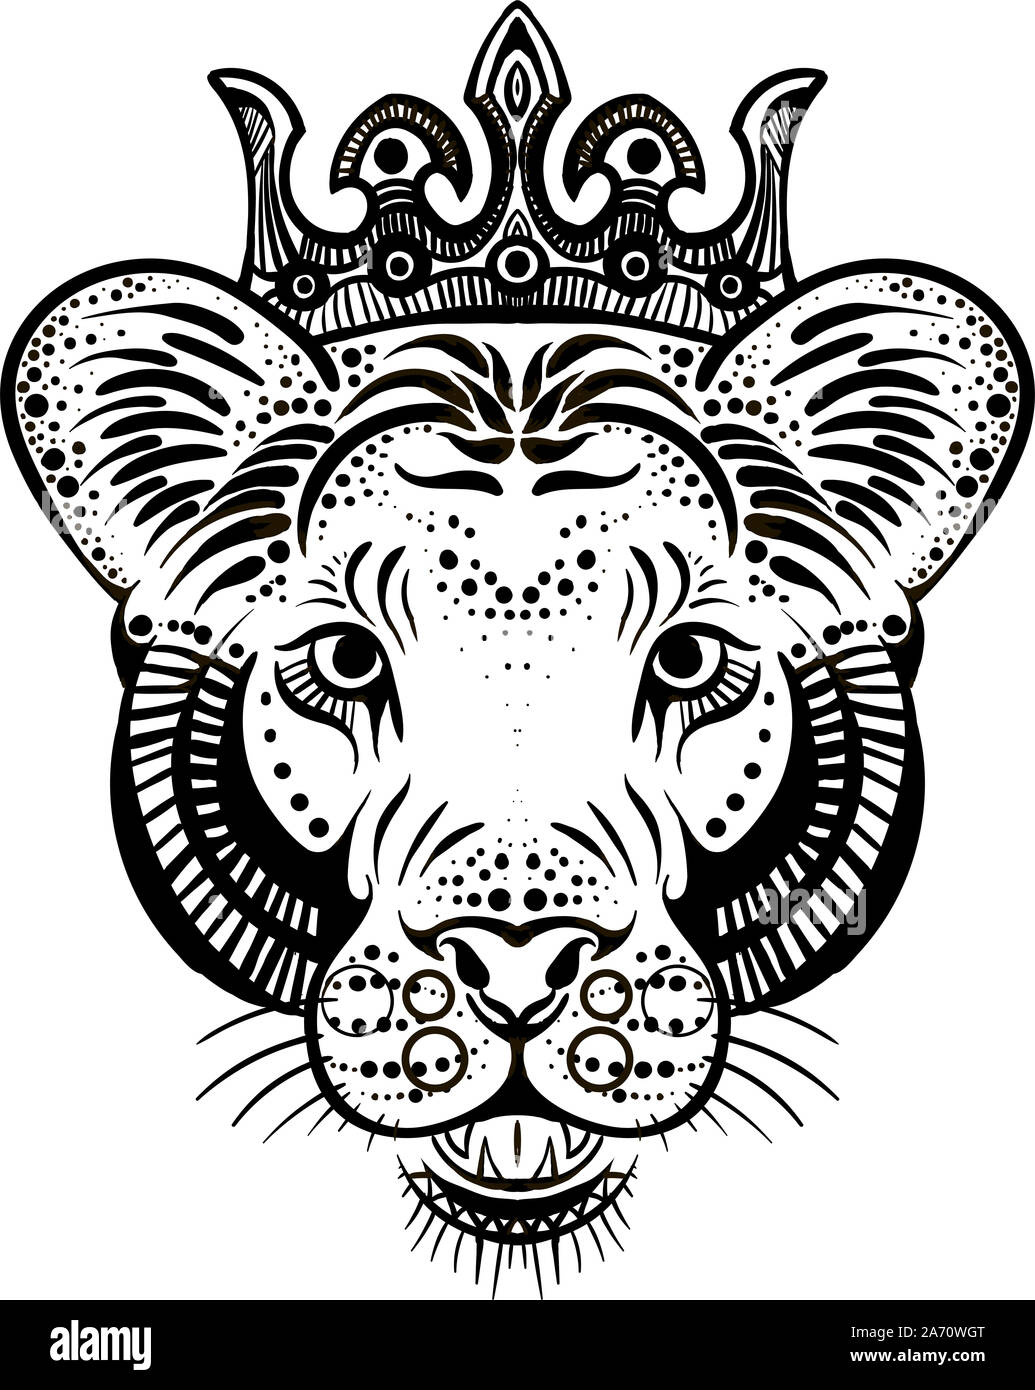 lion king and regular lion tattoo designs on lionkingclub4777 - DeviantArt